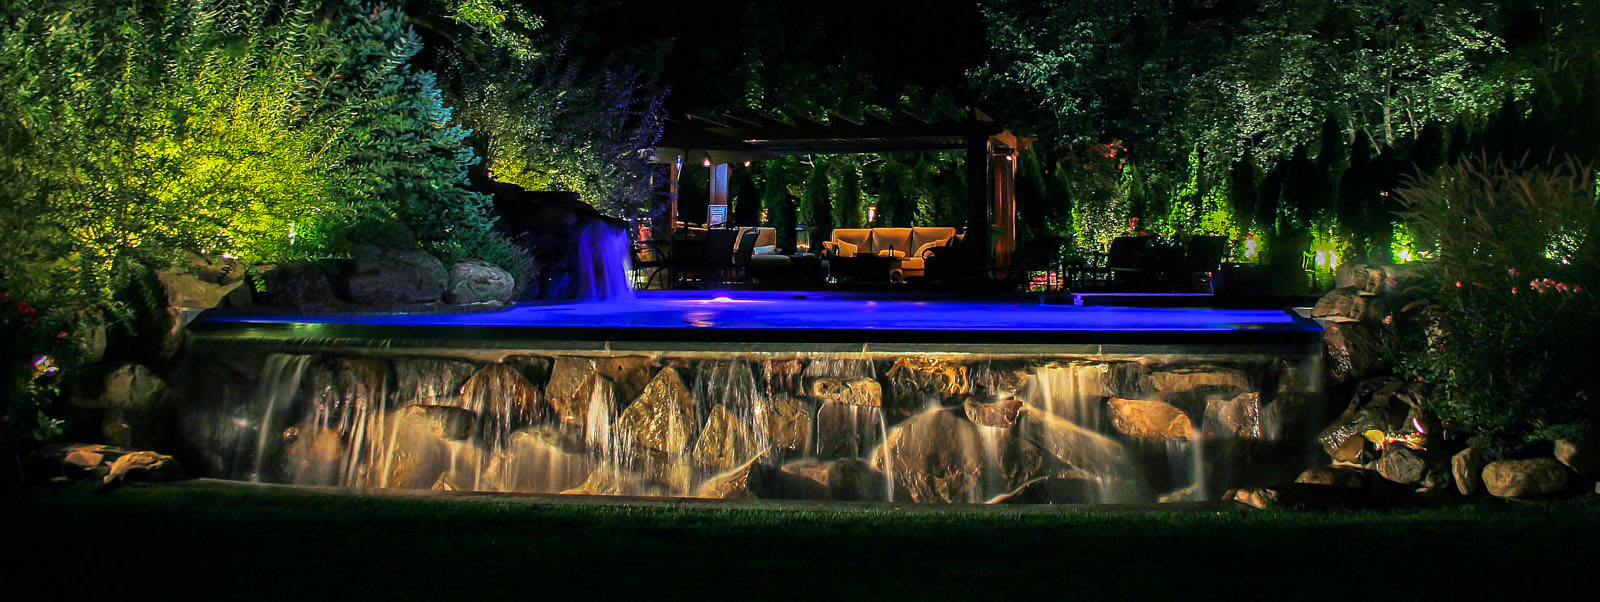 nj landscape lighting design illuminating pool, waterfall, pergola, and surrounding landscape